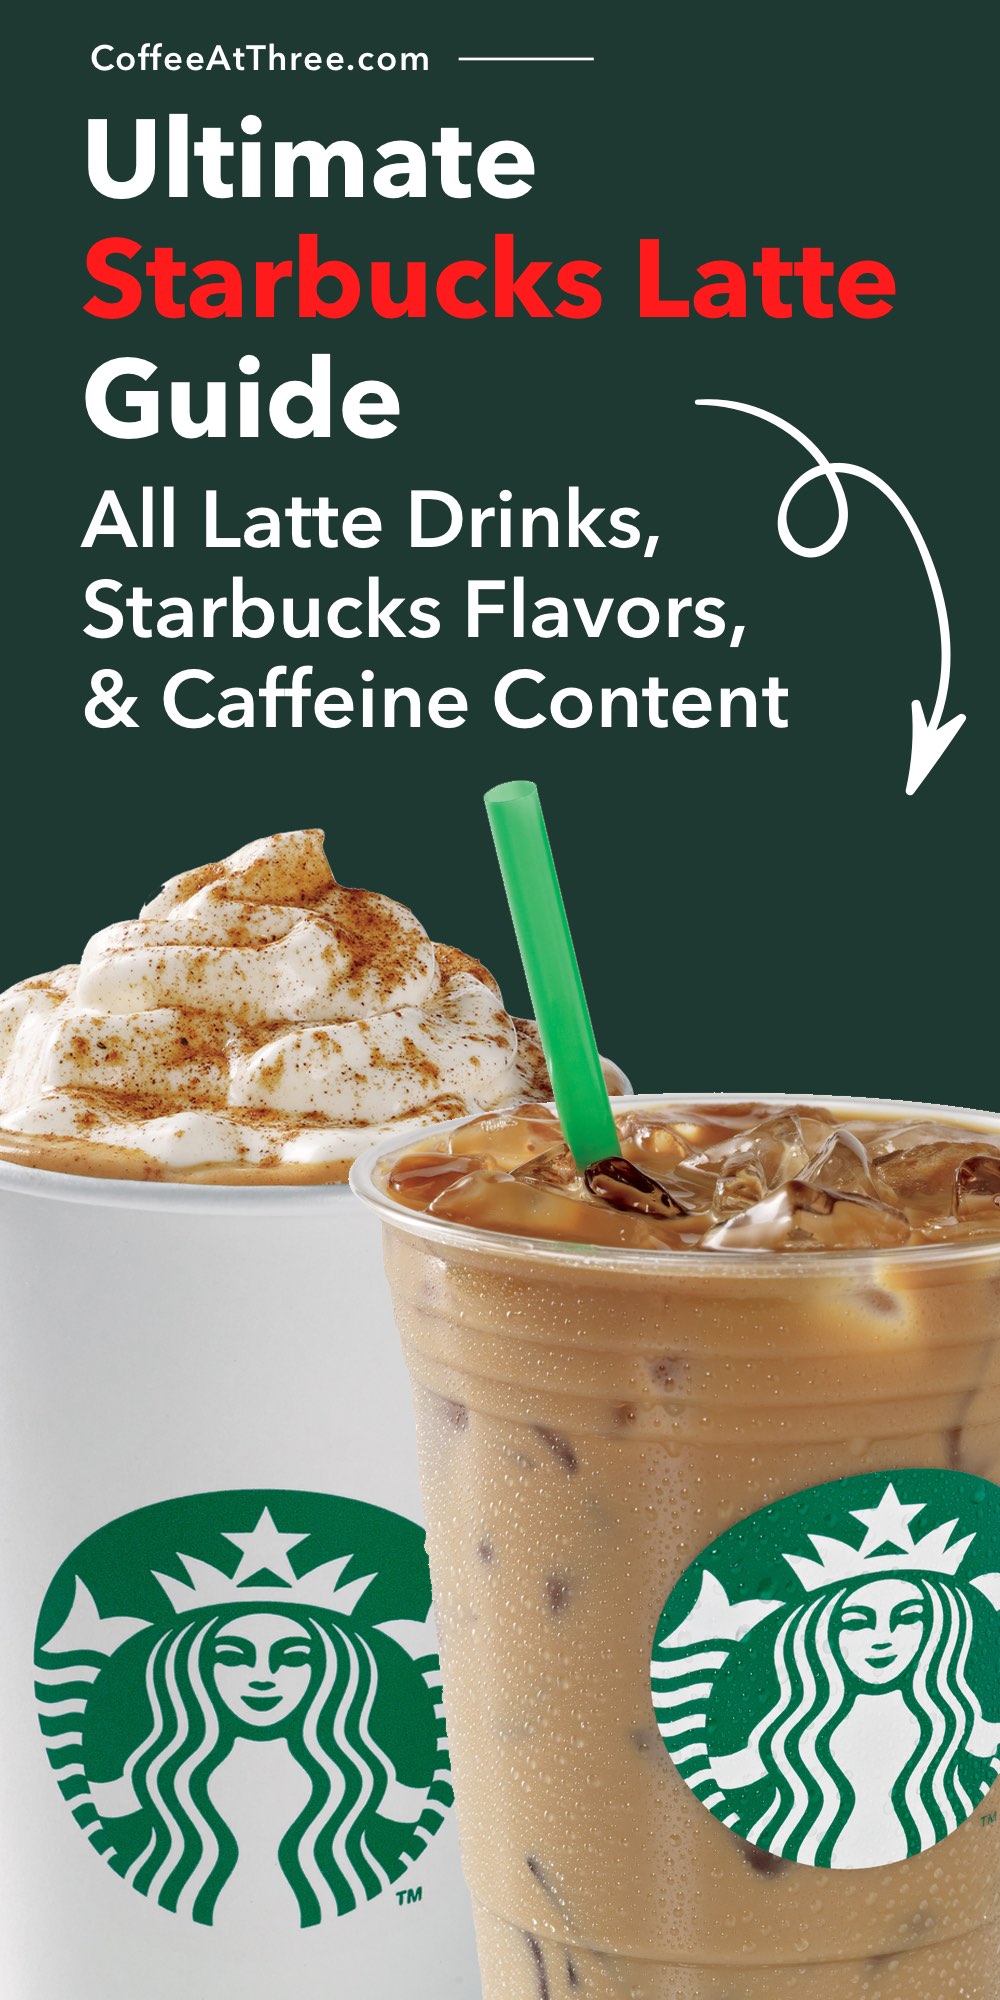 Starbucks Latte Guide: drankmenu, Starbucks-smaken en cafeïnegehalte